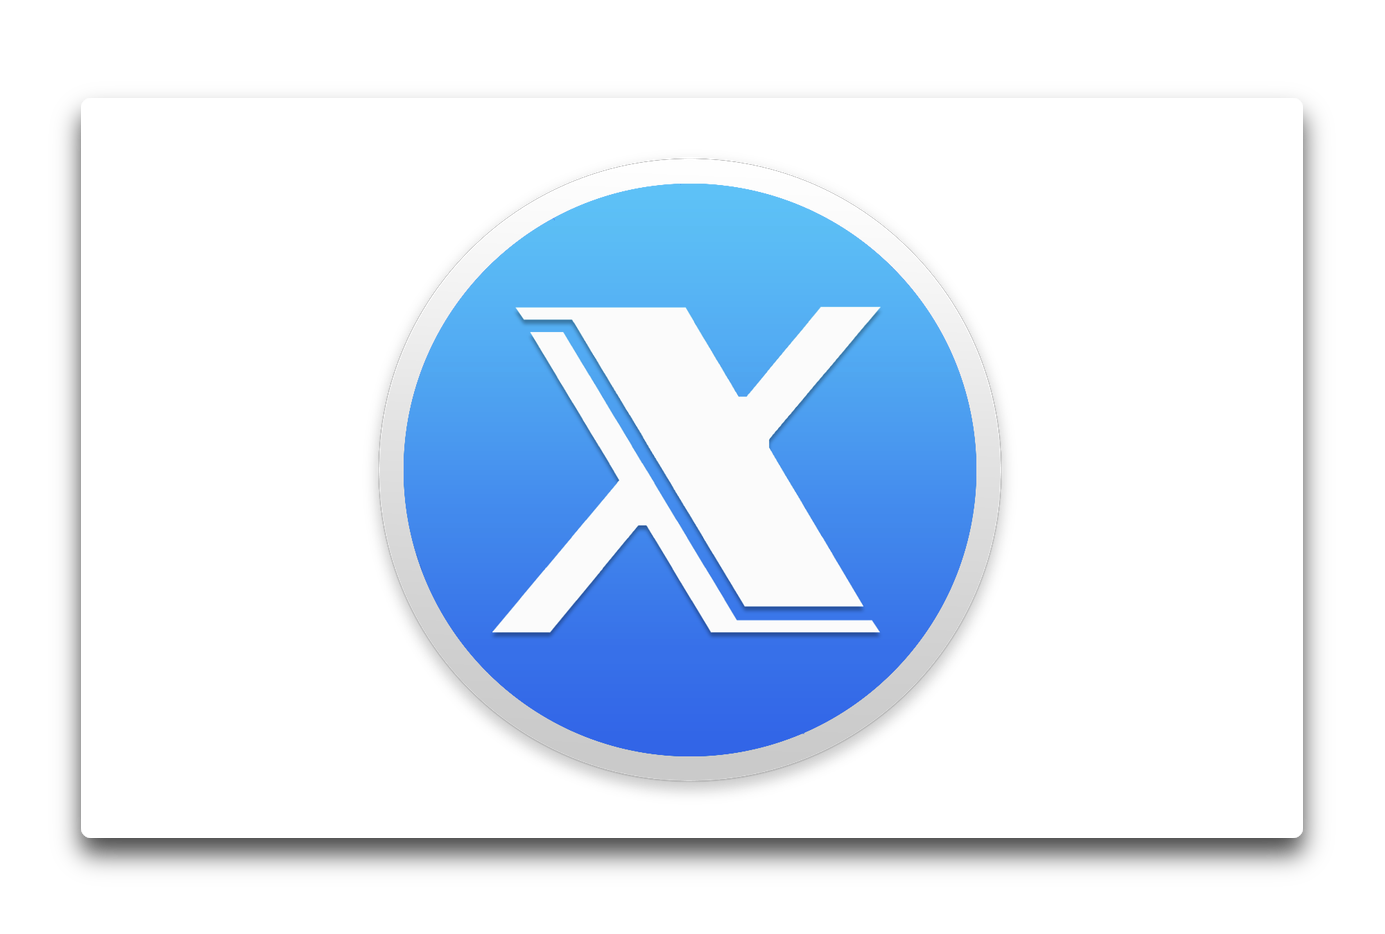 【Mac】Titanium Software、ローカルTimeMachineスナップショット機能を追加した「OnyX」をリリース